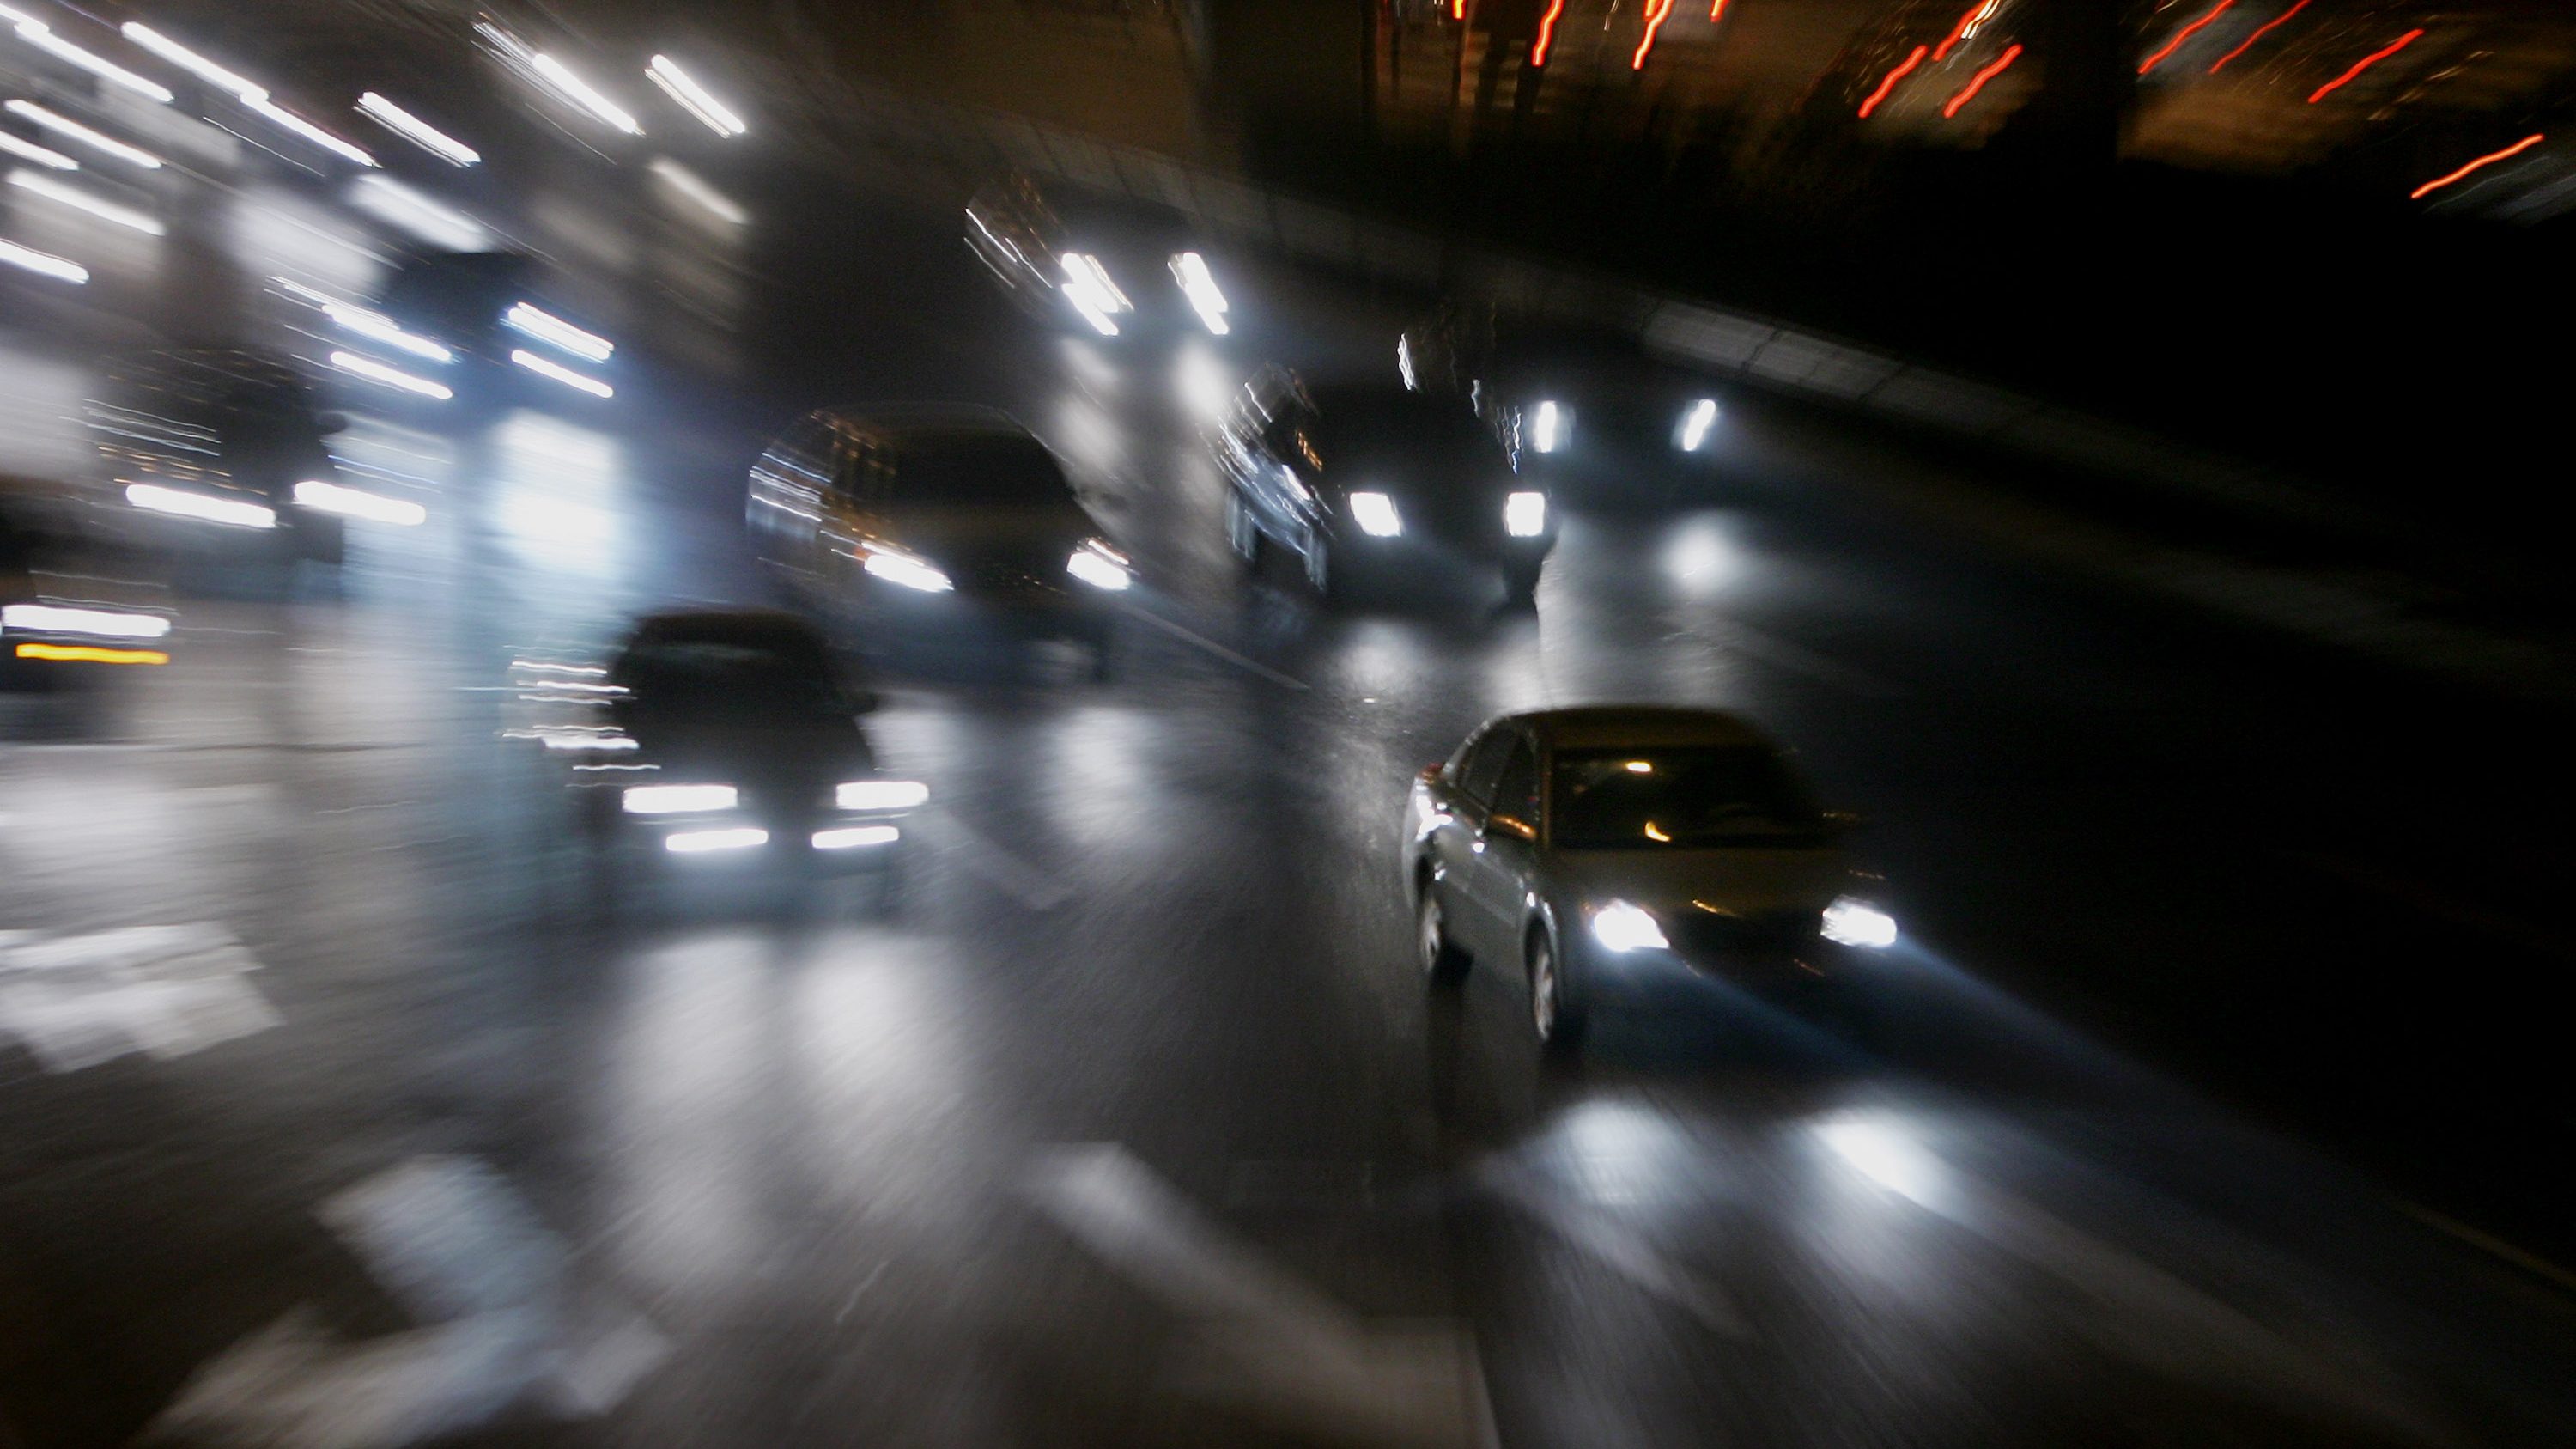 Adaptive headlights will soon make night driving brighter - Marketplace